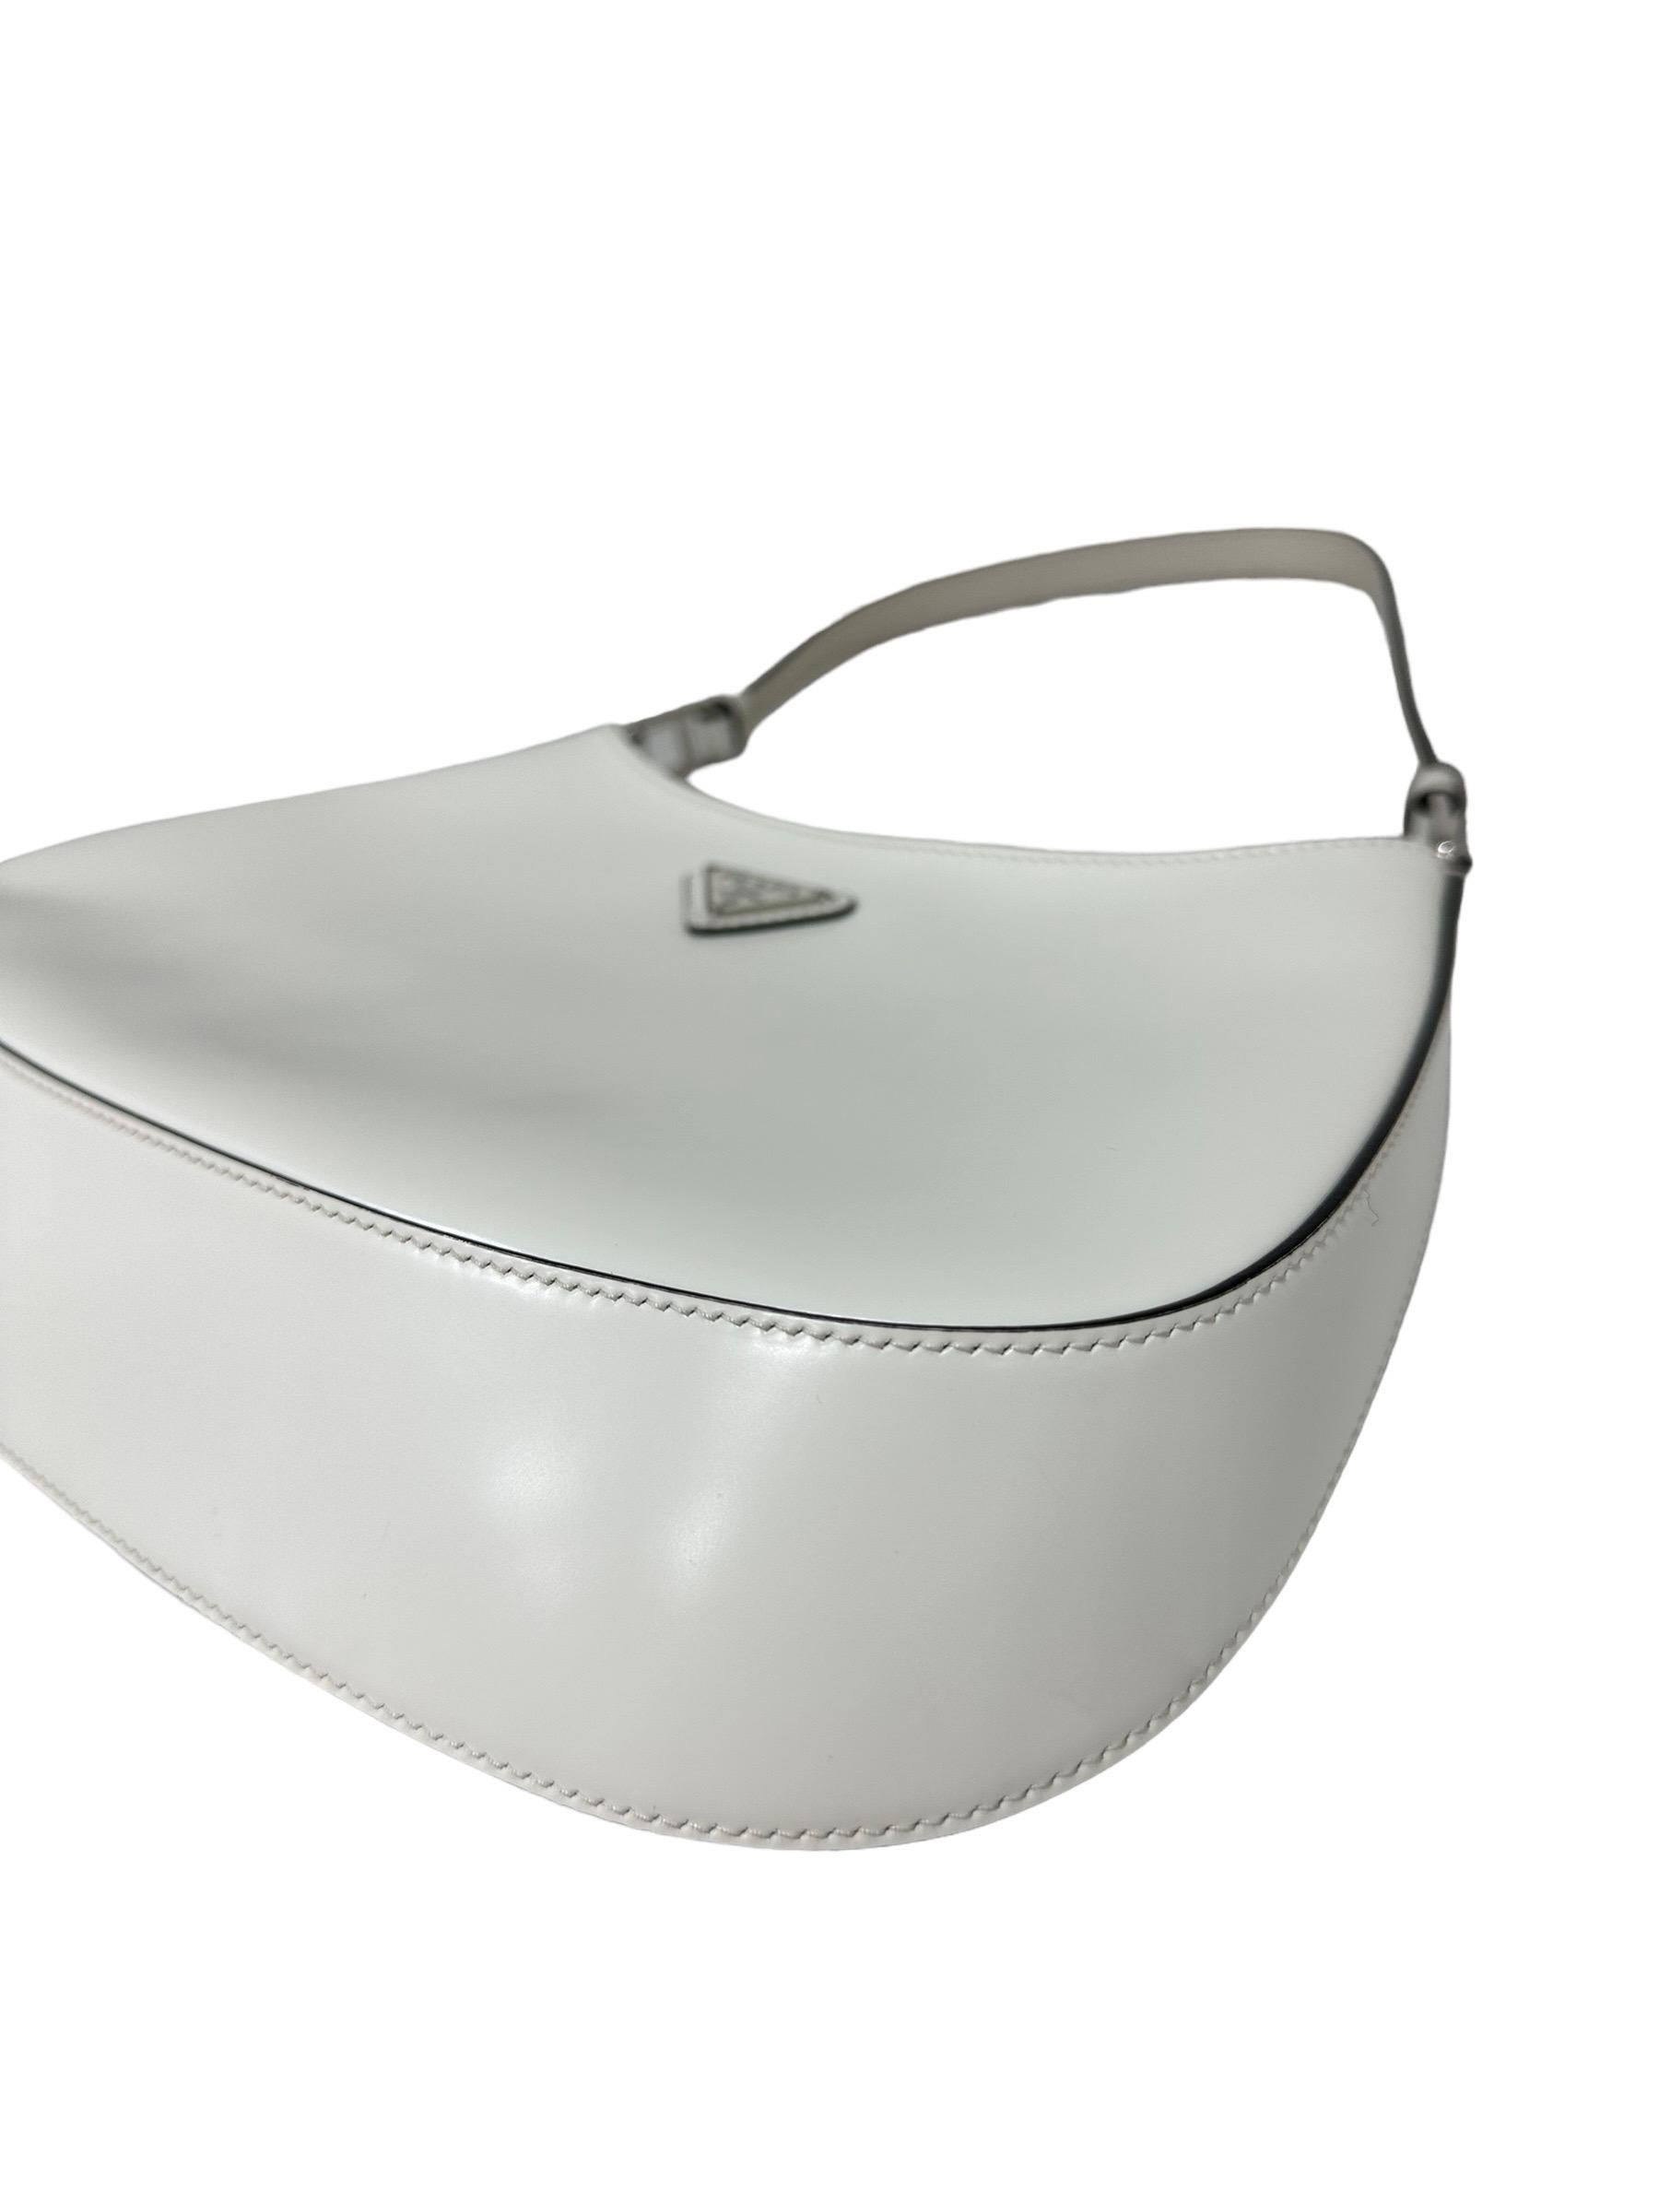 Prada Cleo White Leather Shoulder Bag 7